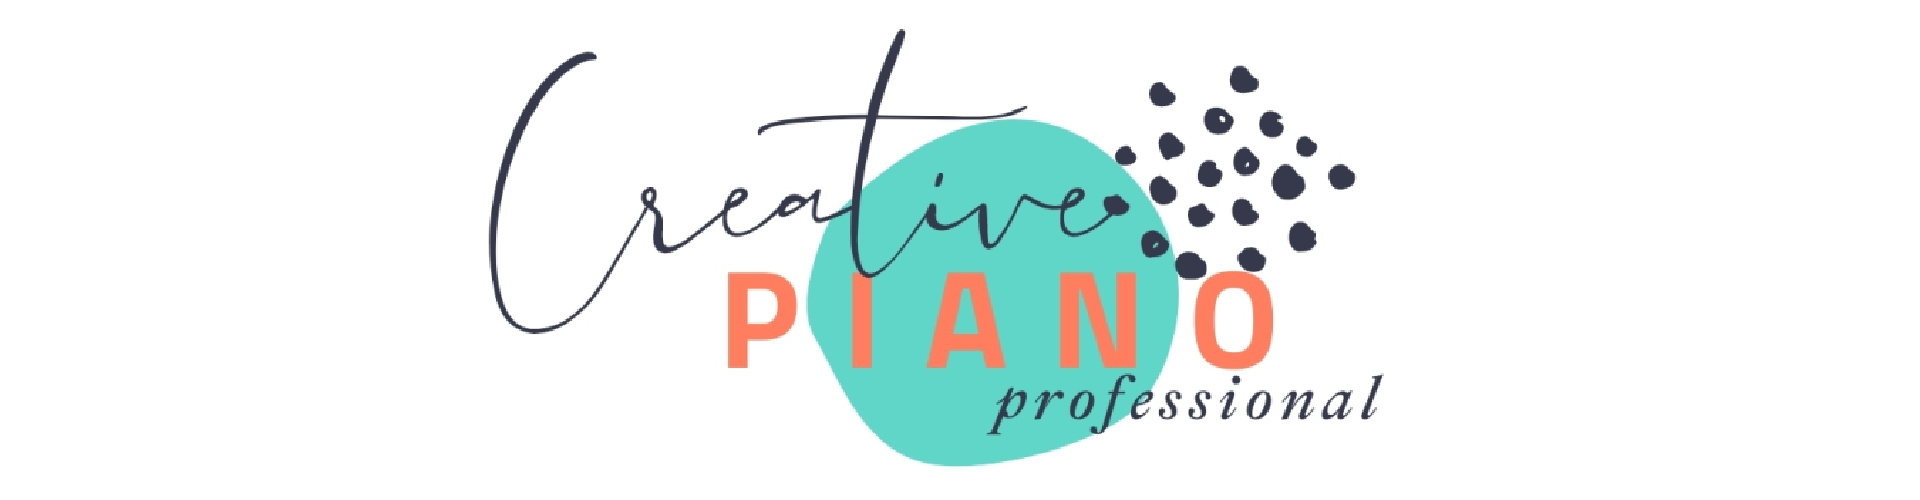 Creative piano professional Website